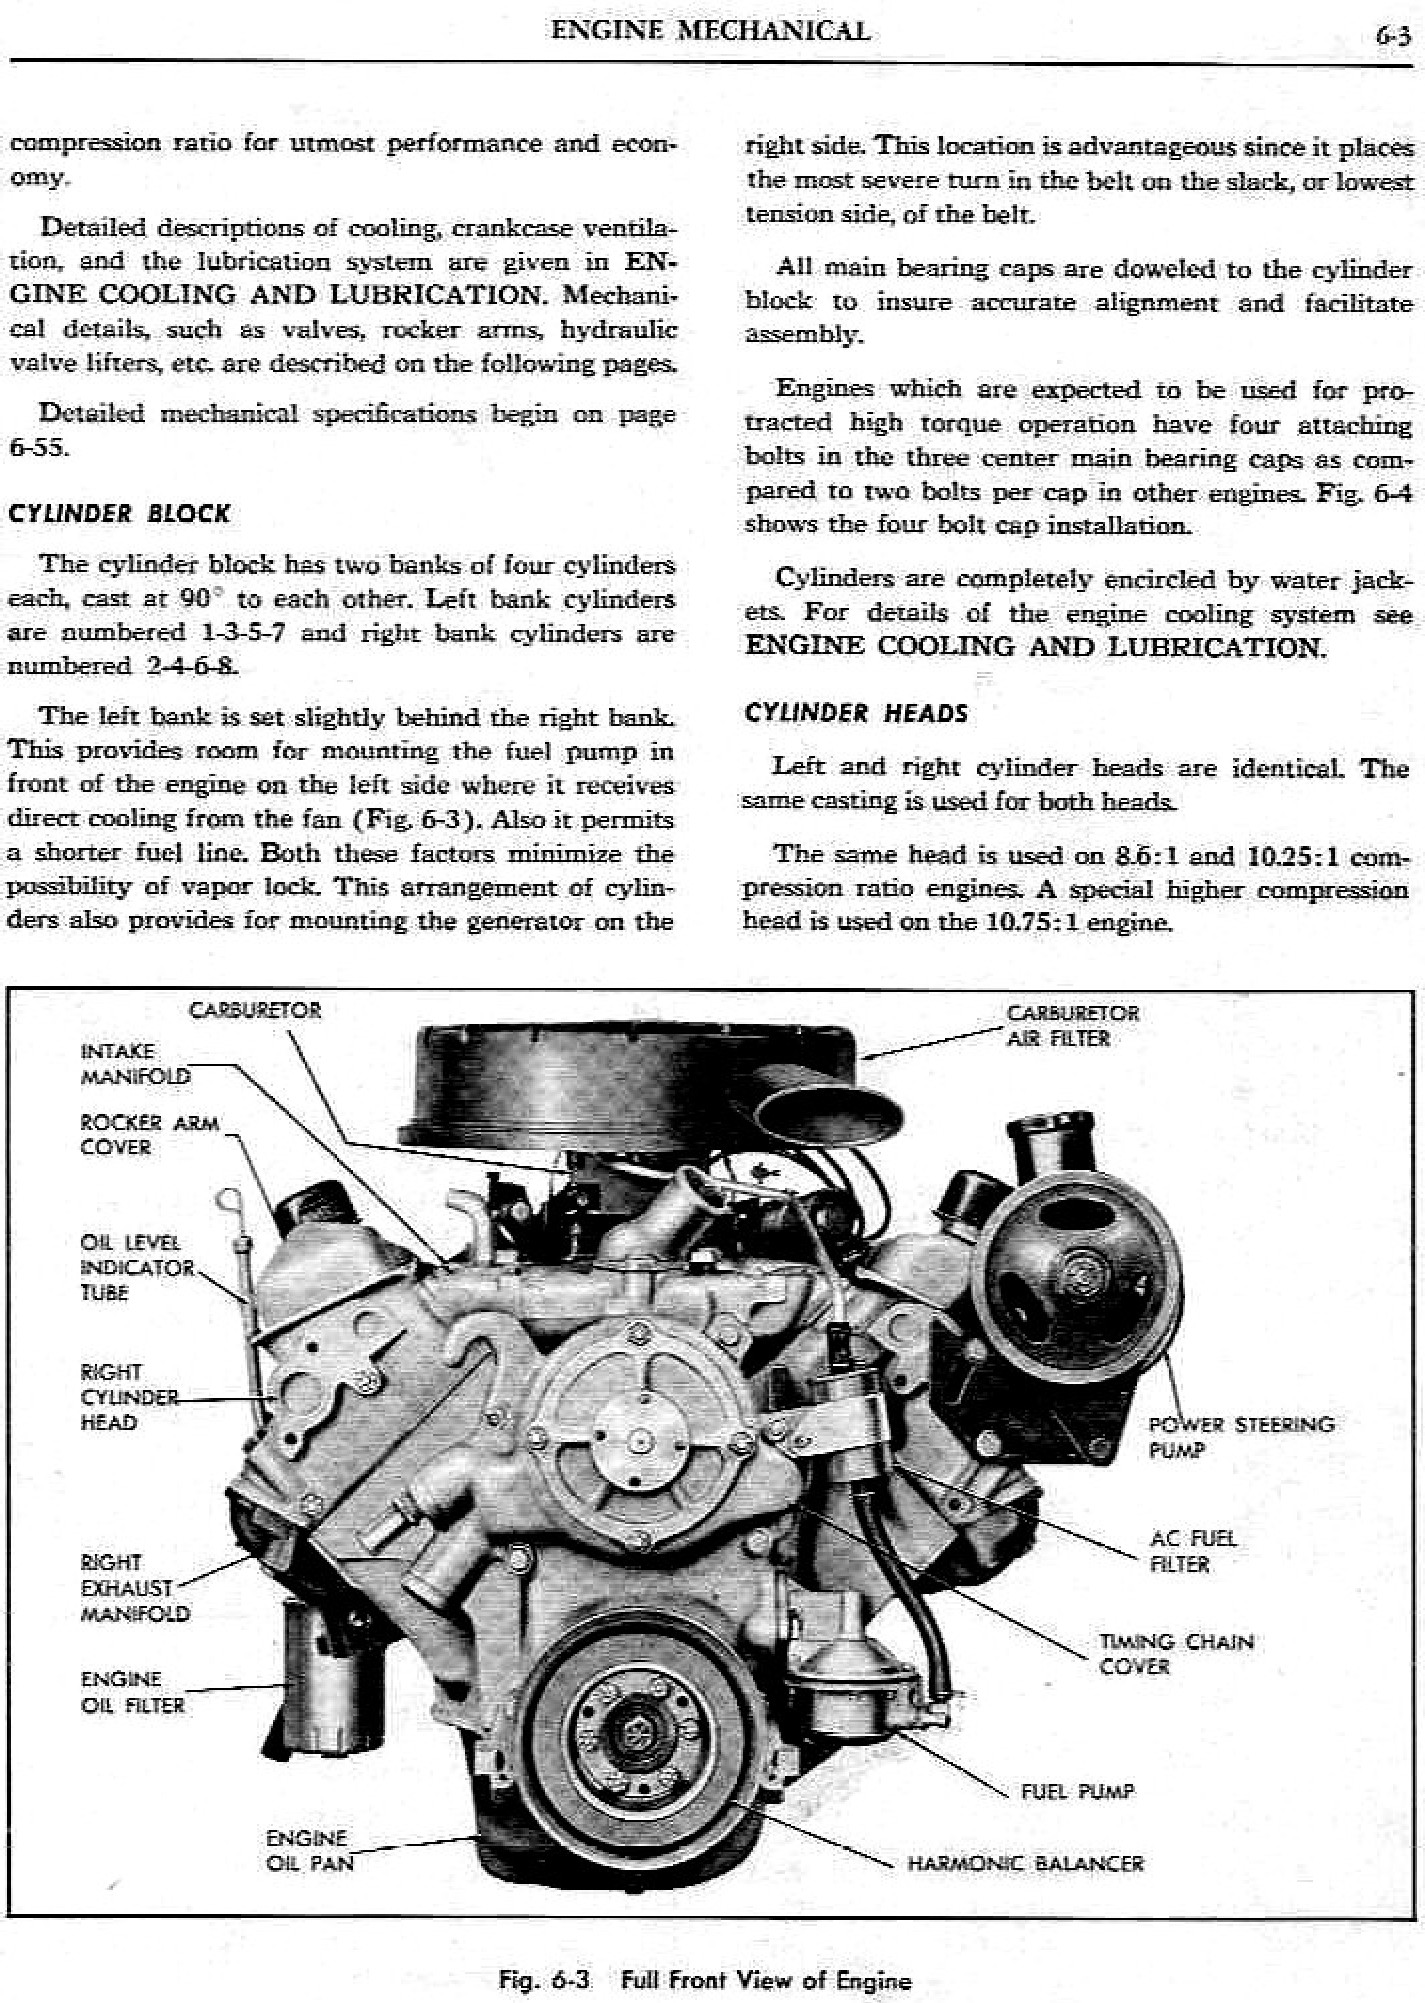 1961 Pontiac Shop Manual- Engine Page 4 of 63